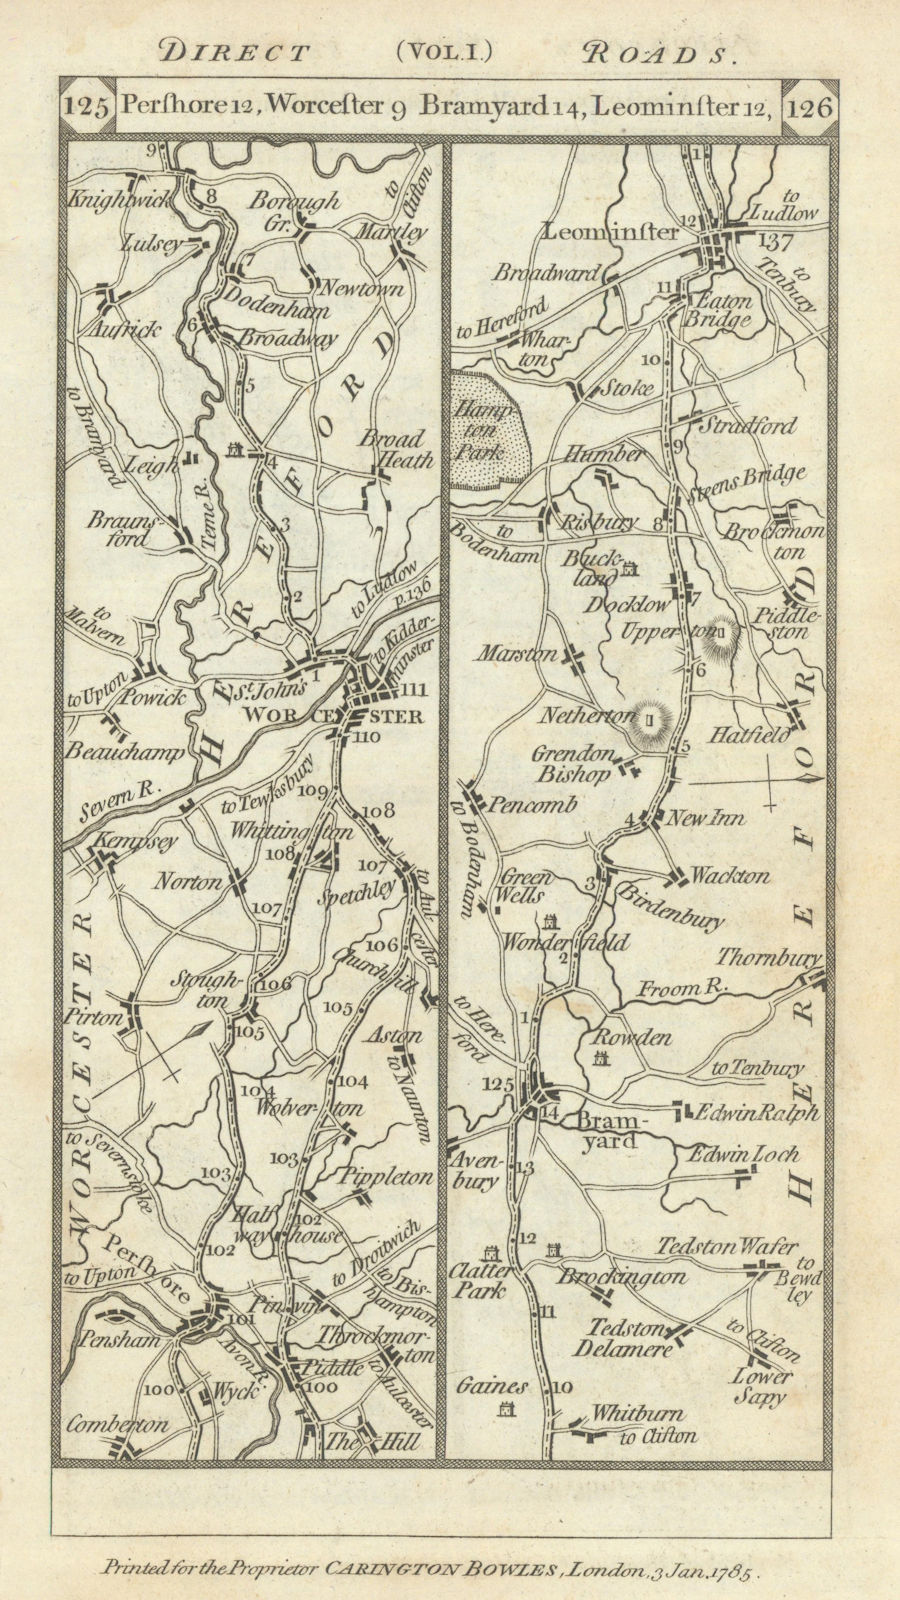 Associate Product Pershore - Worcester - Bromyard - Leominster road strip map PATERSON 1785